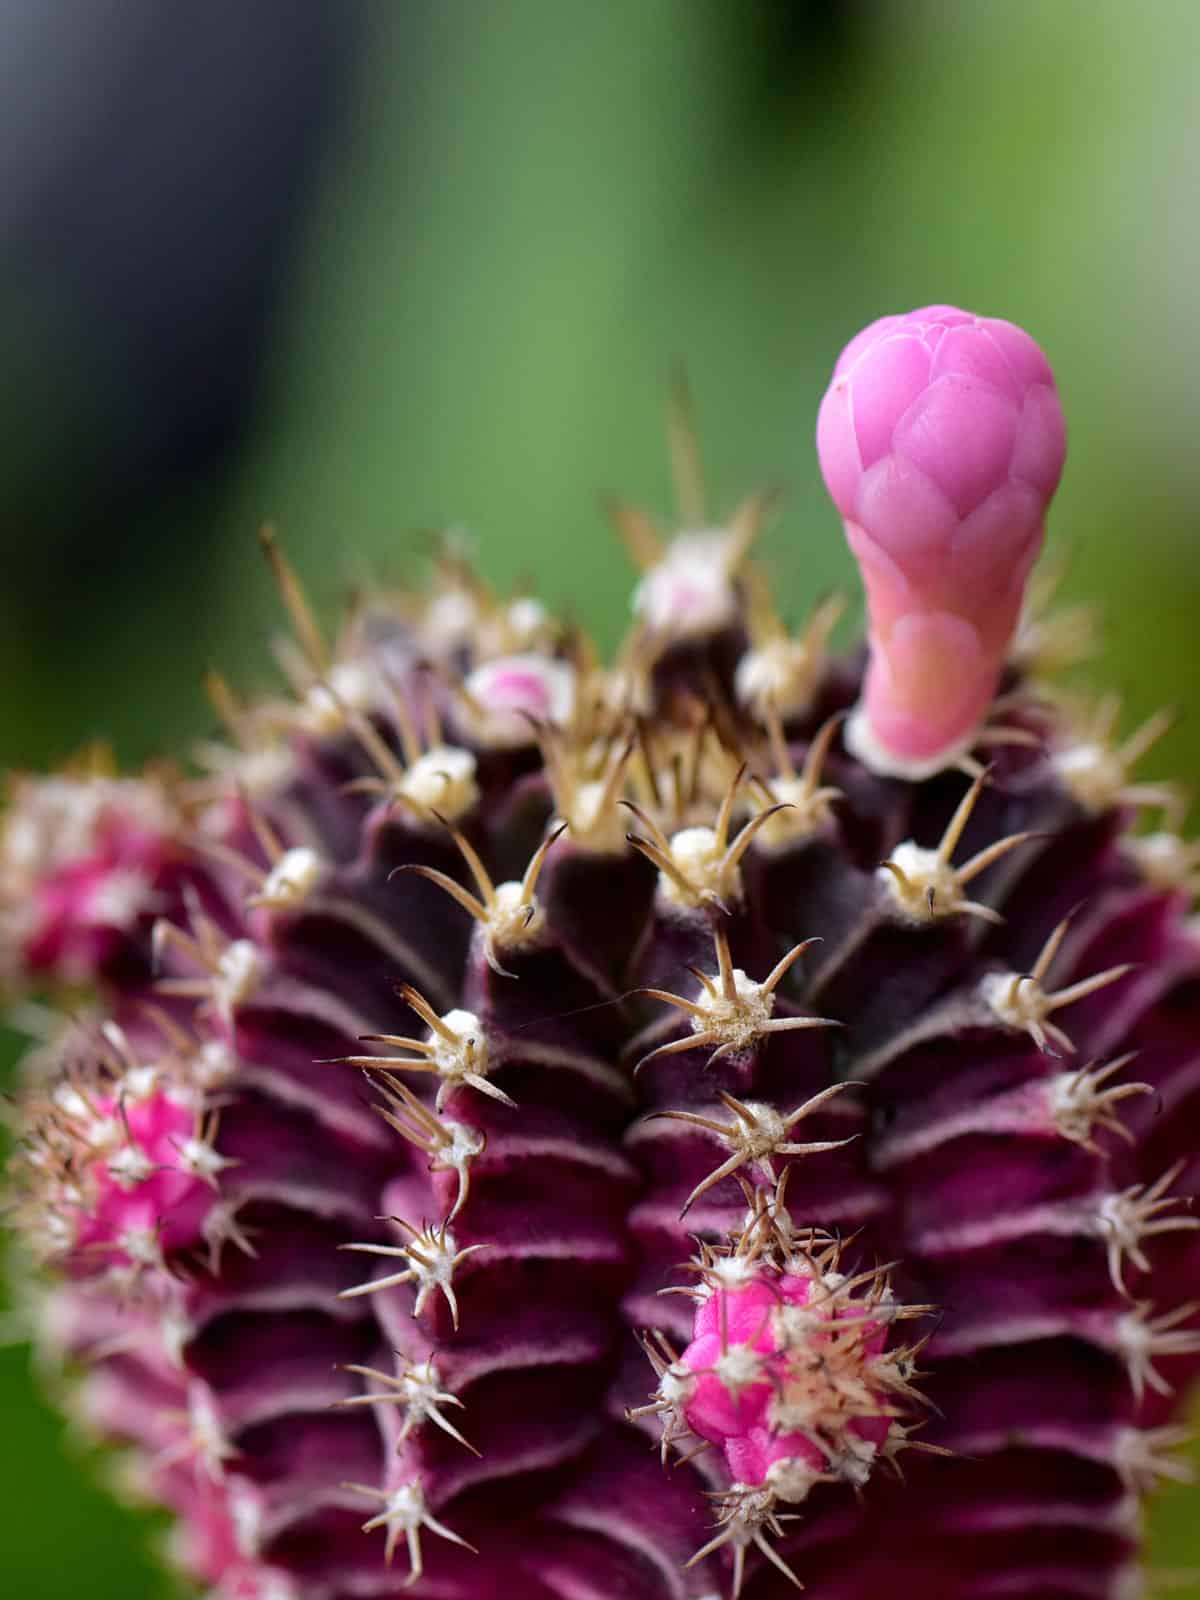 Red Cap Cactus photographed up close